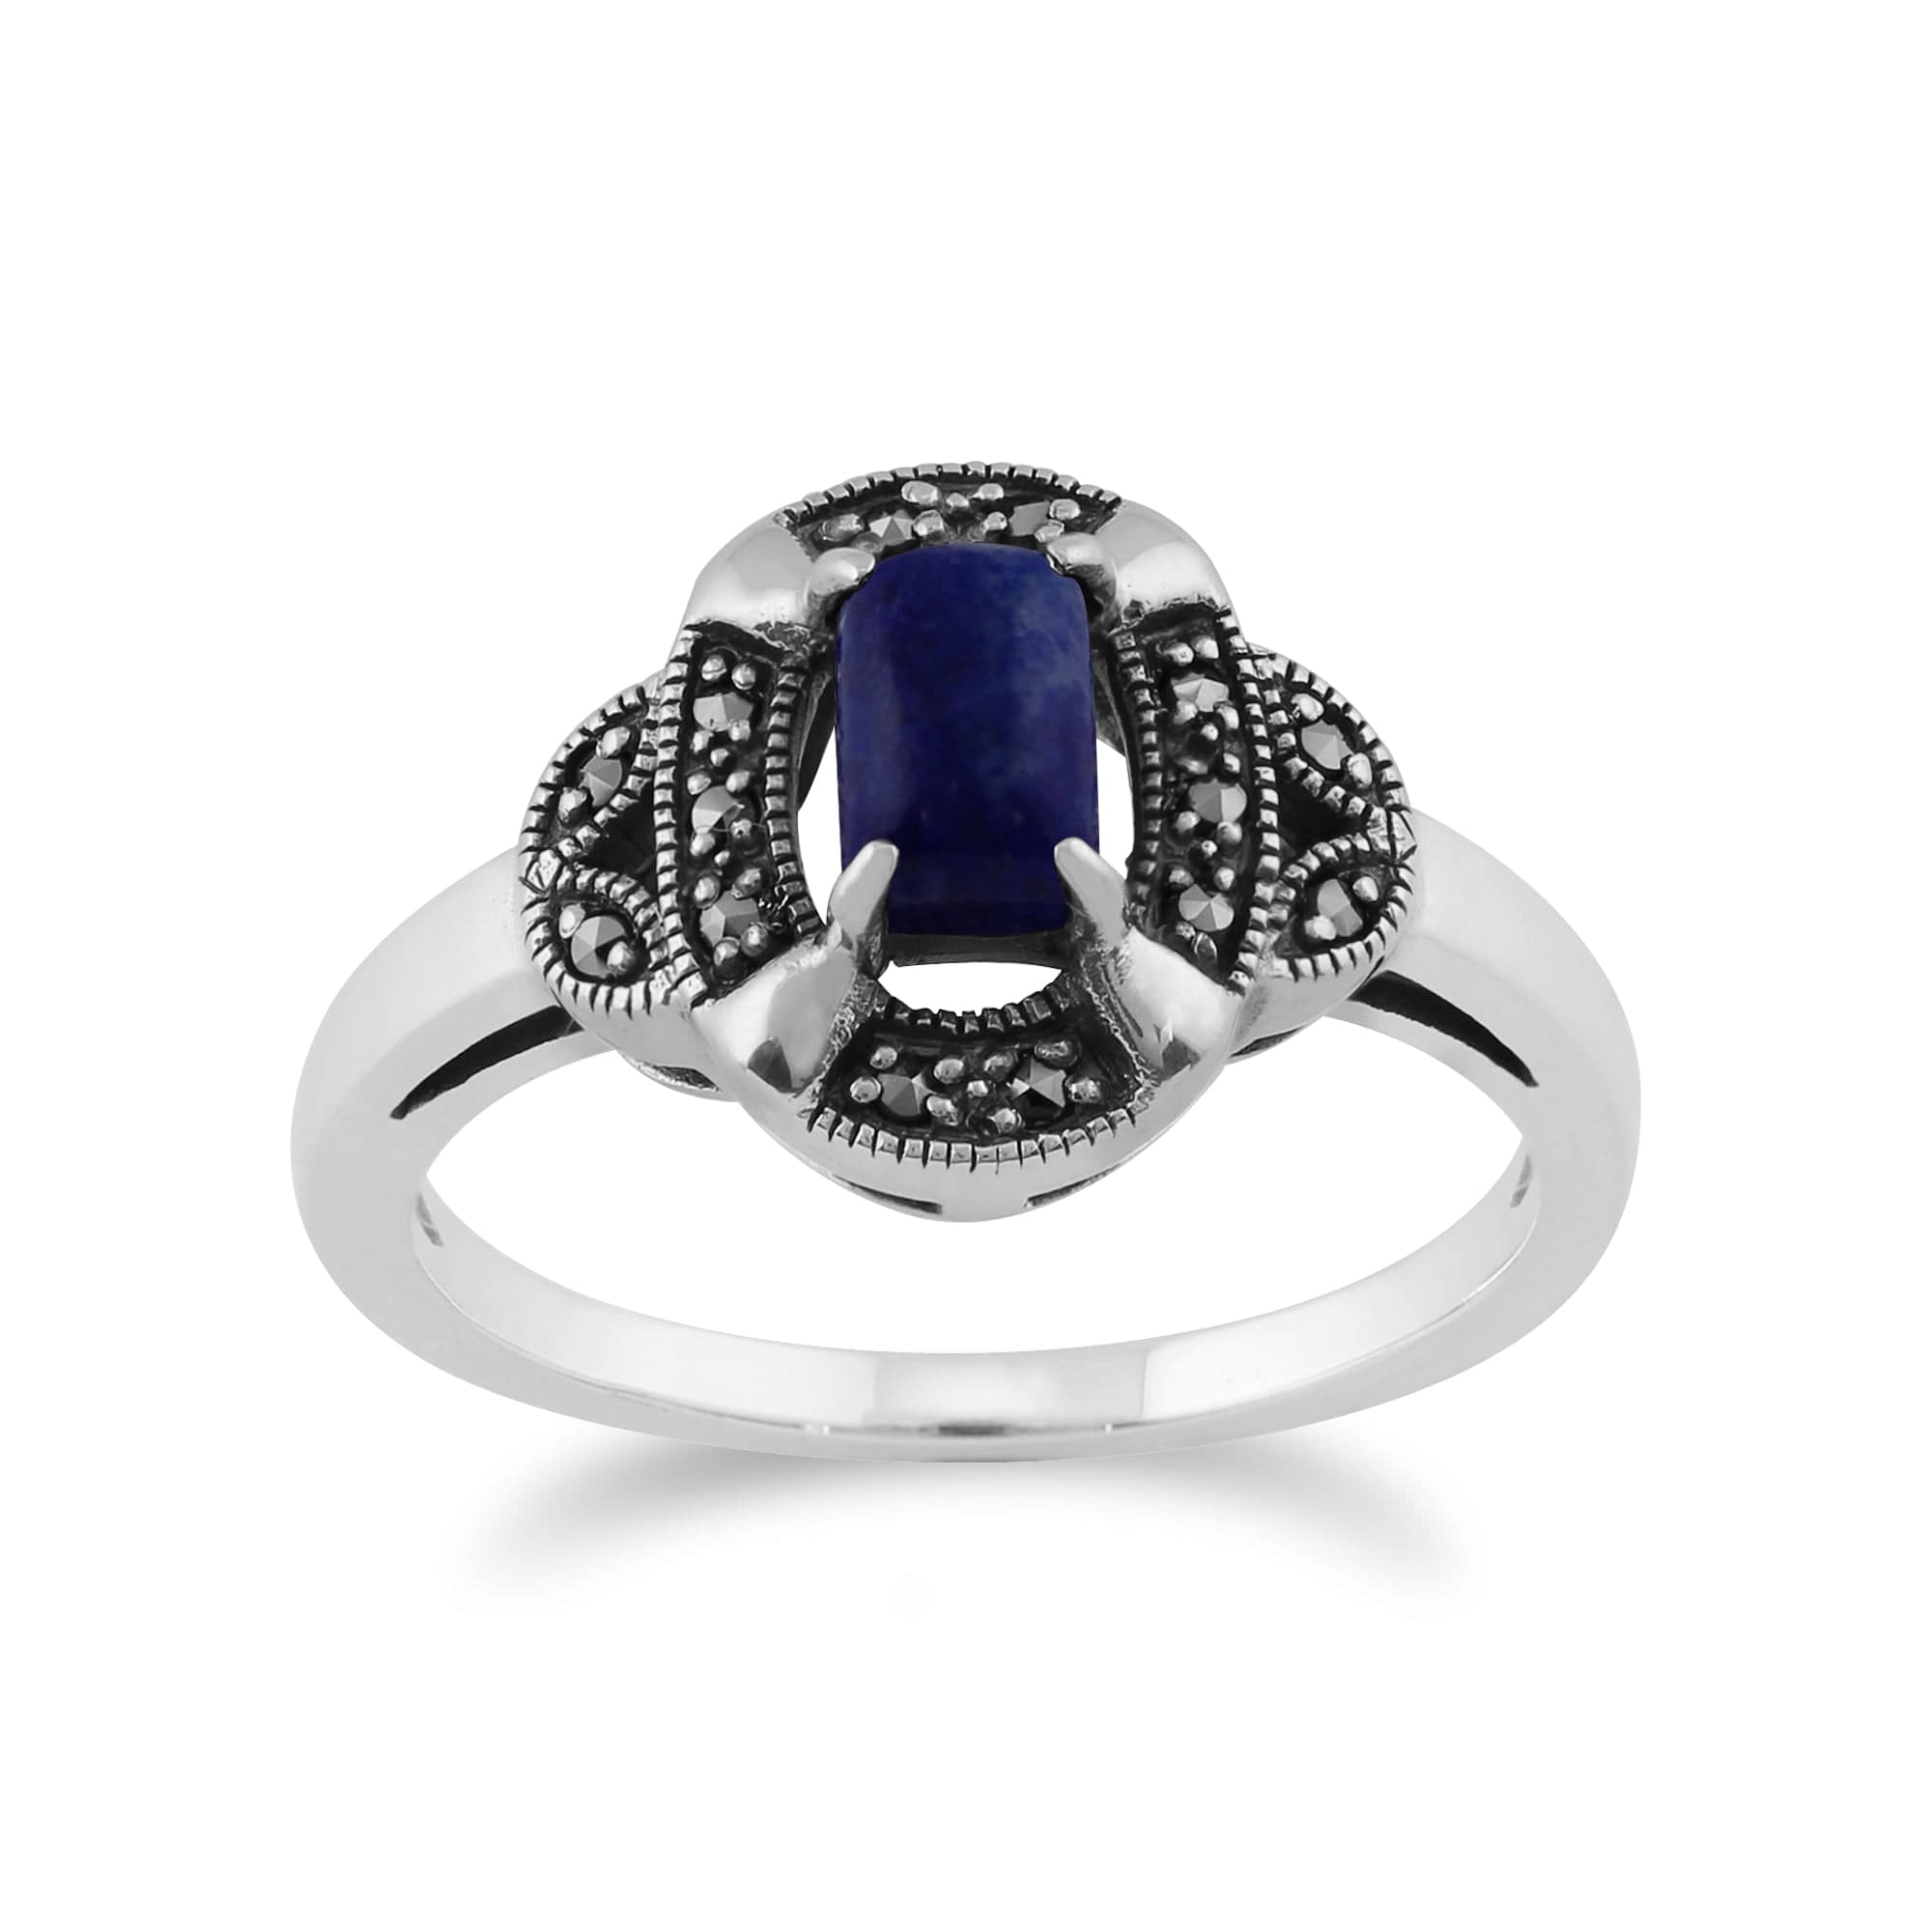 Gemondo 925 Sterling Silver 0.50ct Lapis Lazuli & Marcasite Art Deco Ring Image 1